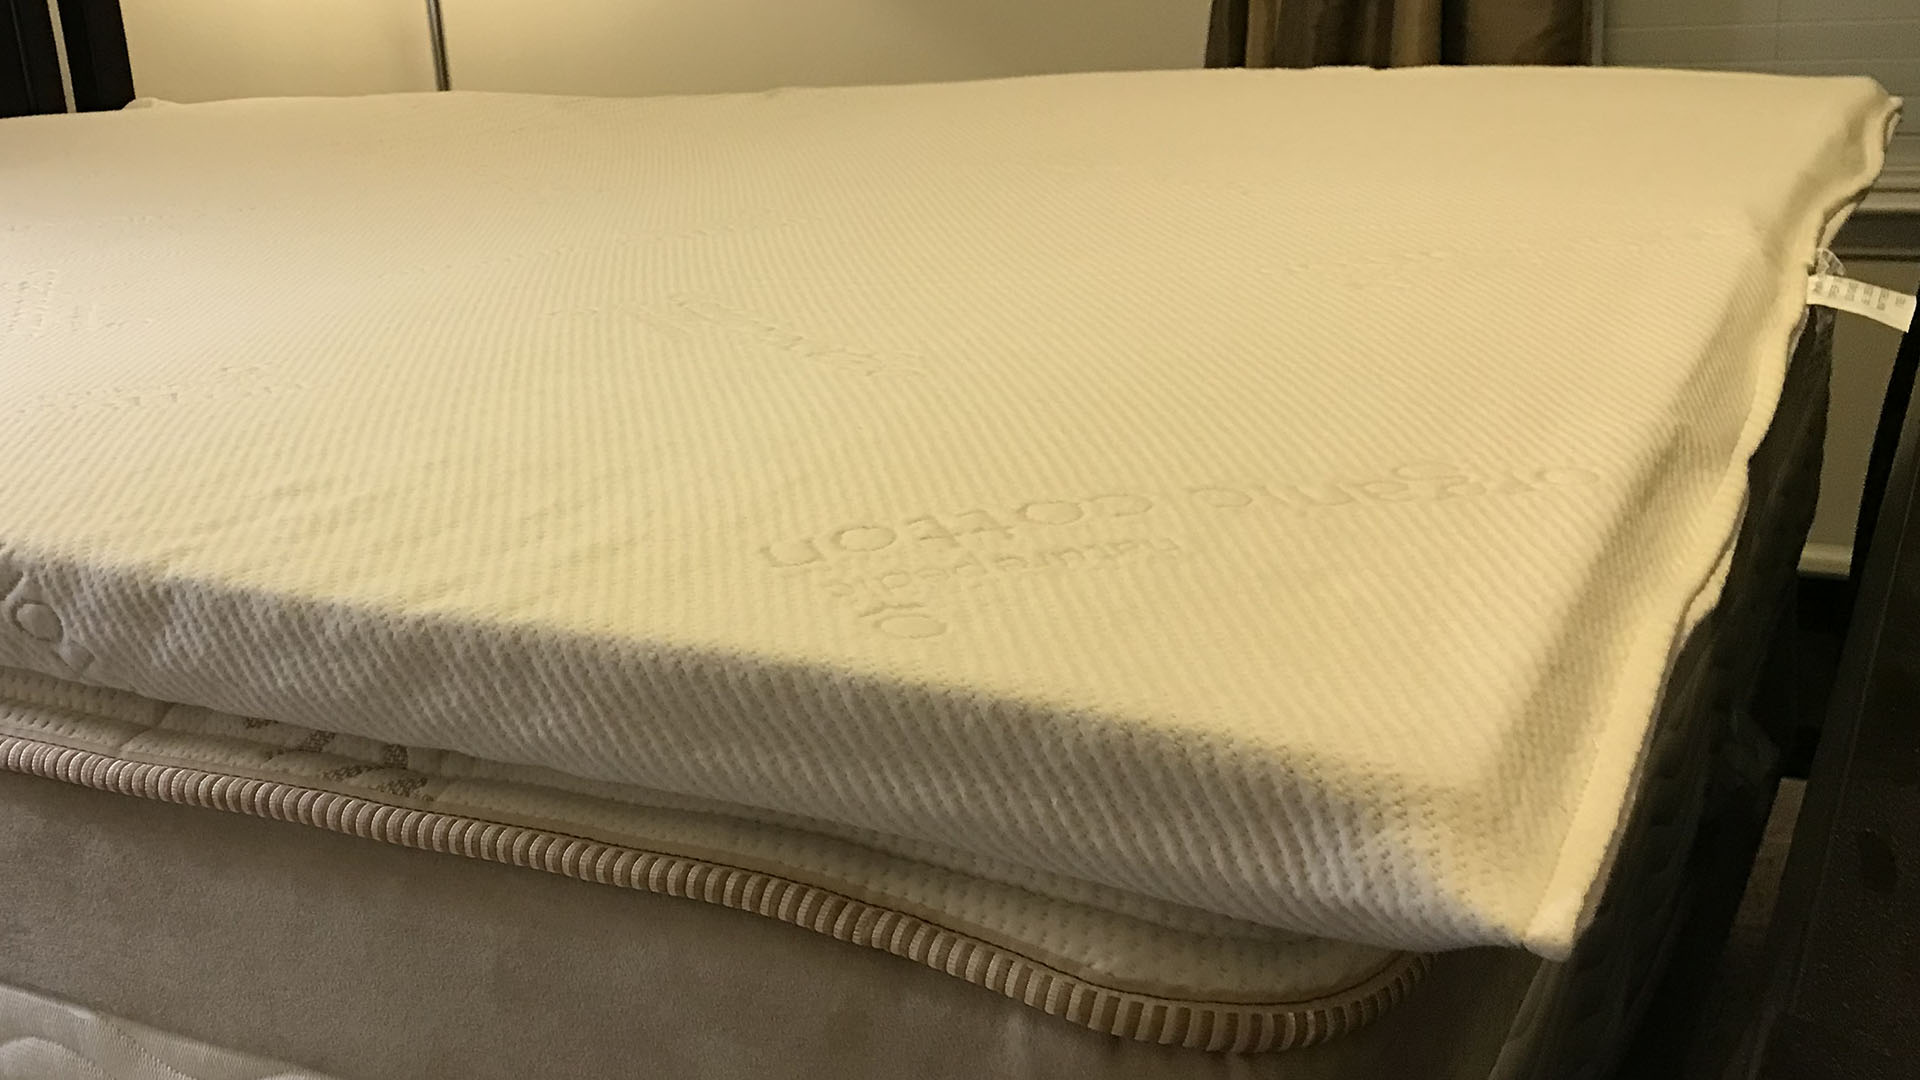 Naturepedic Adagio latex mattress topper on a bed